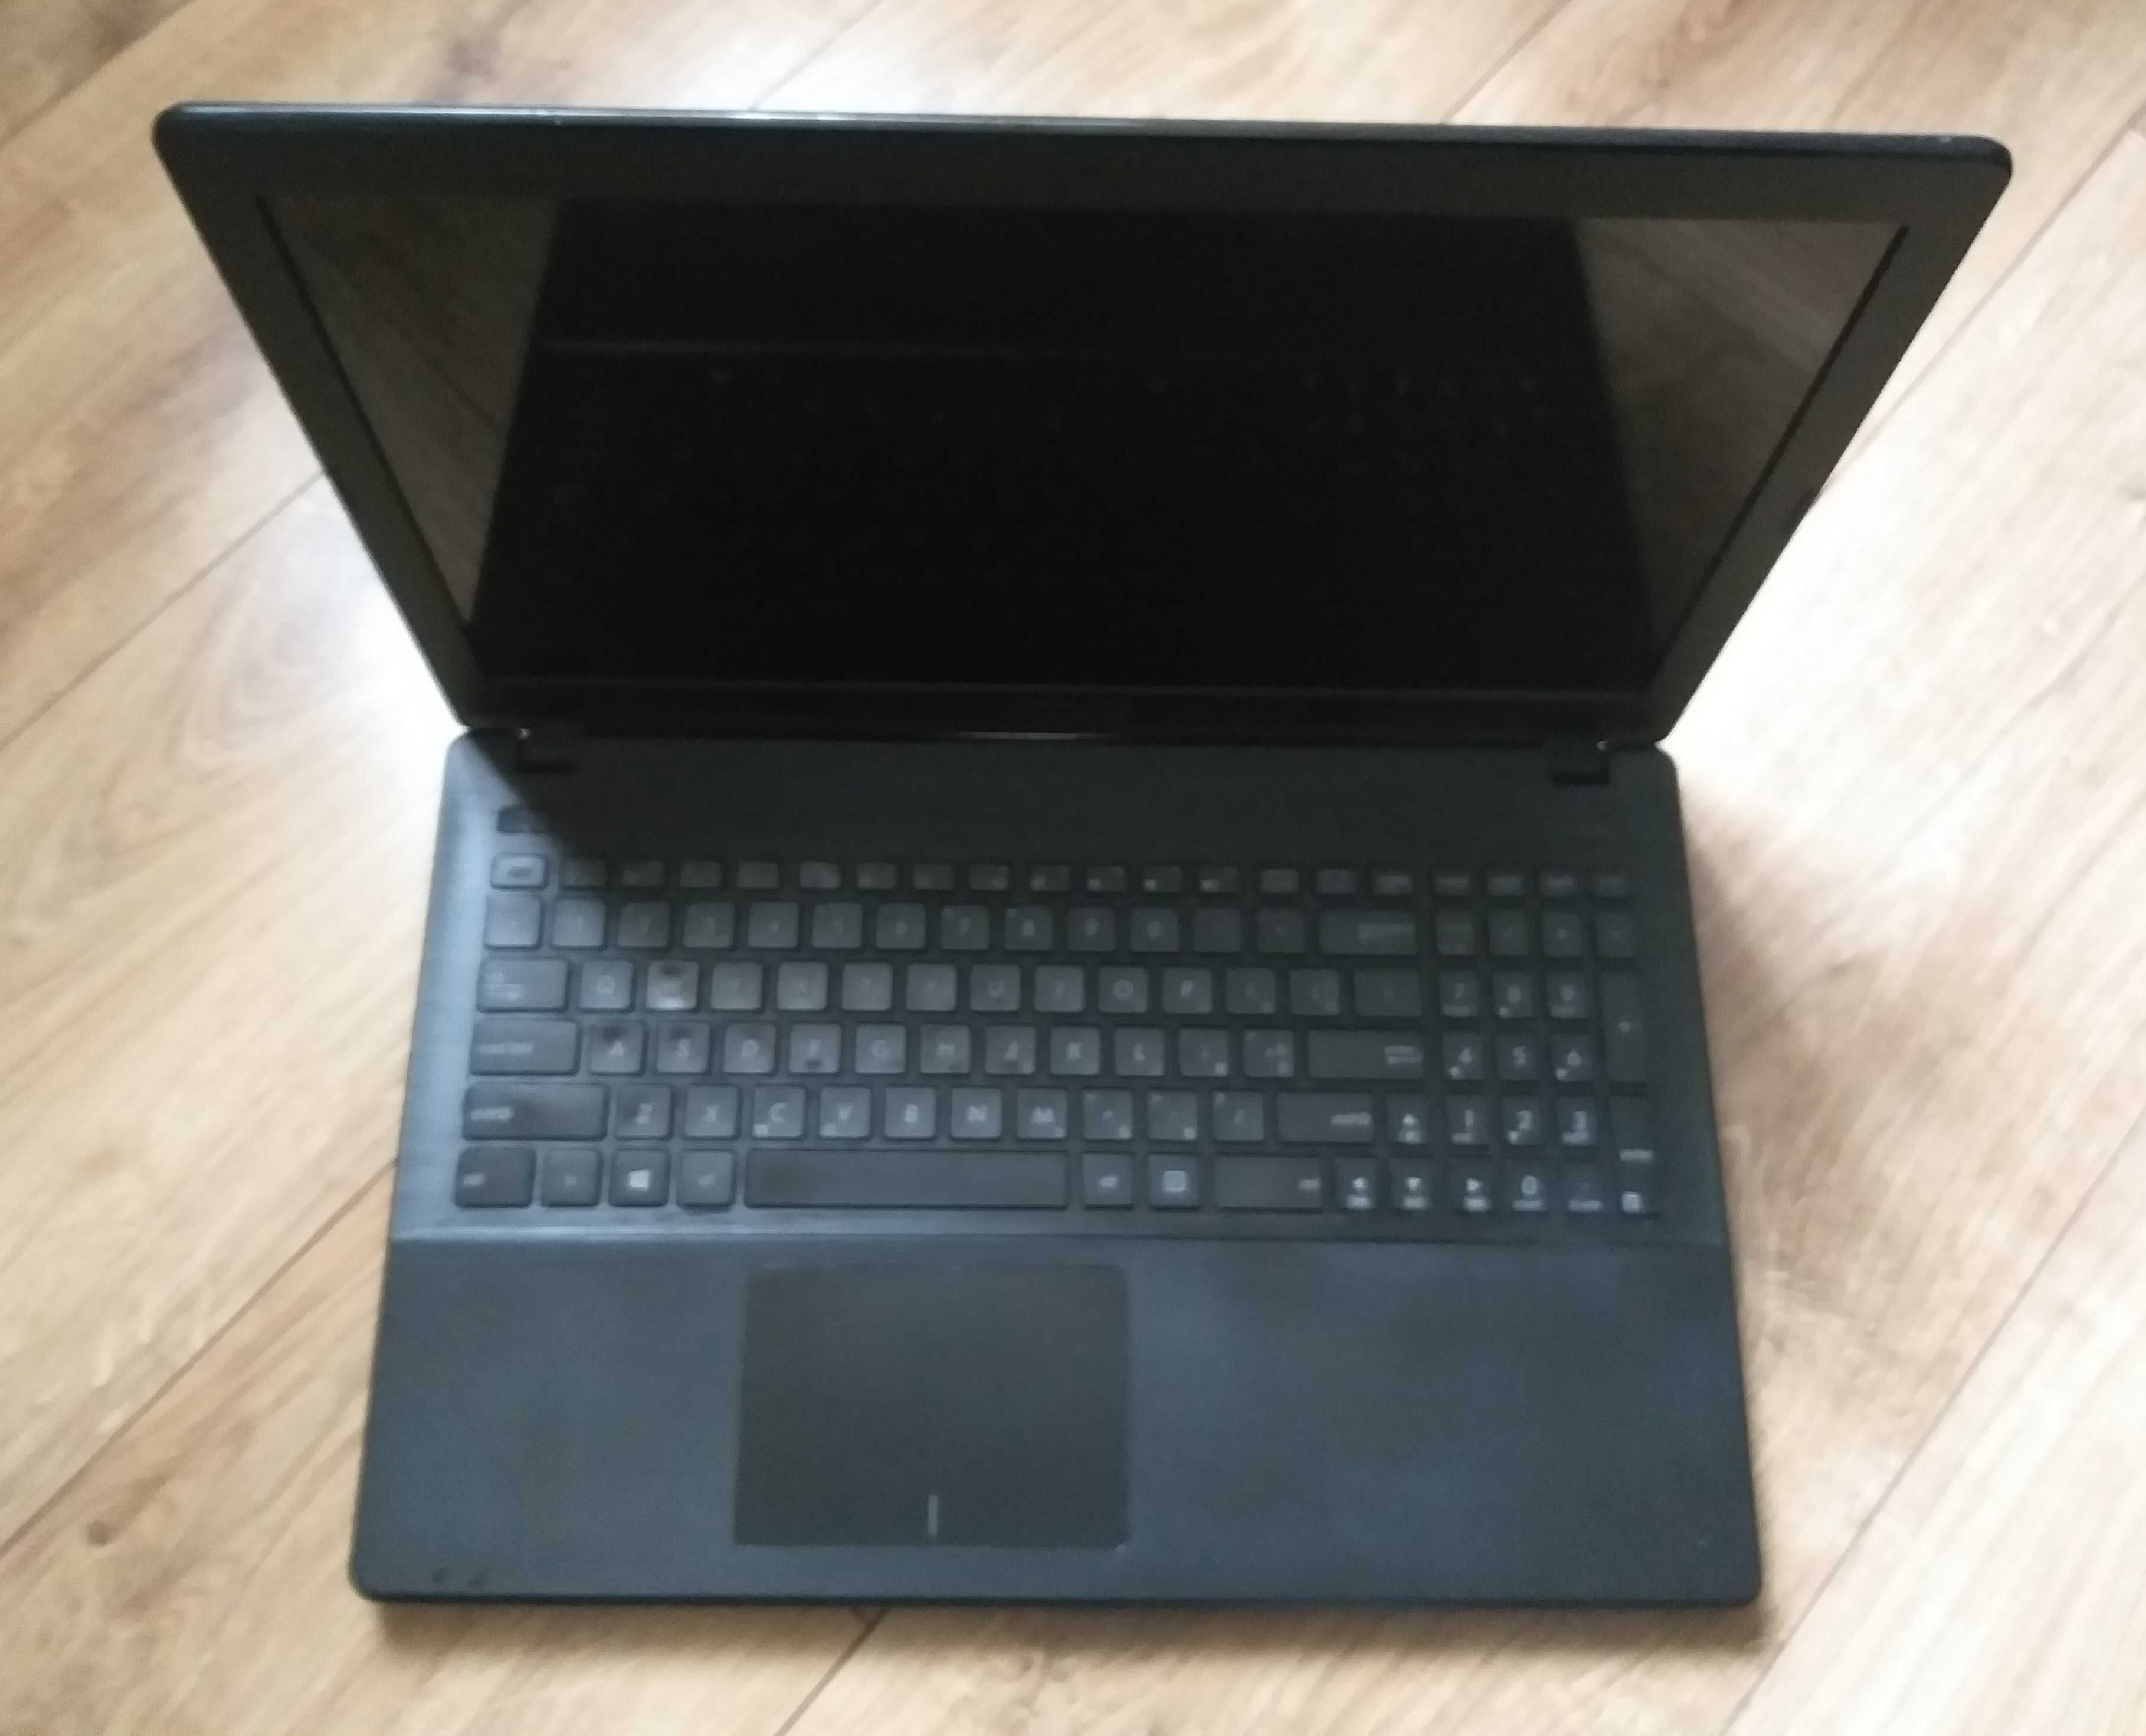 Ноутбук ASUS X551M